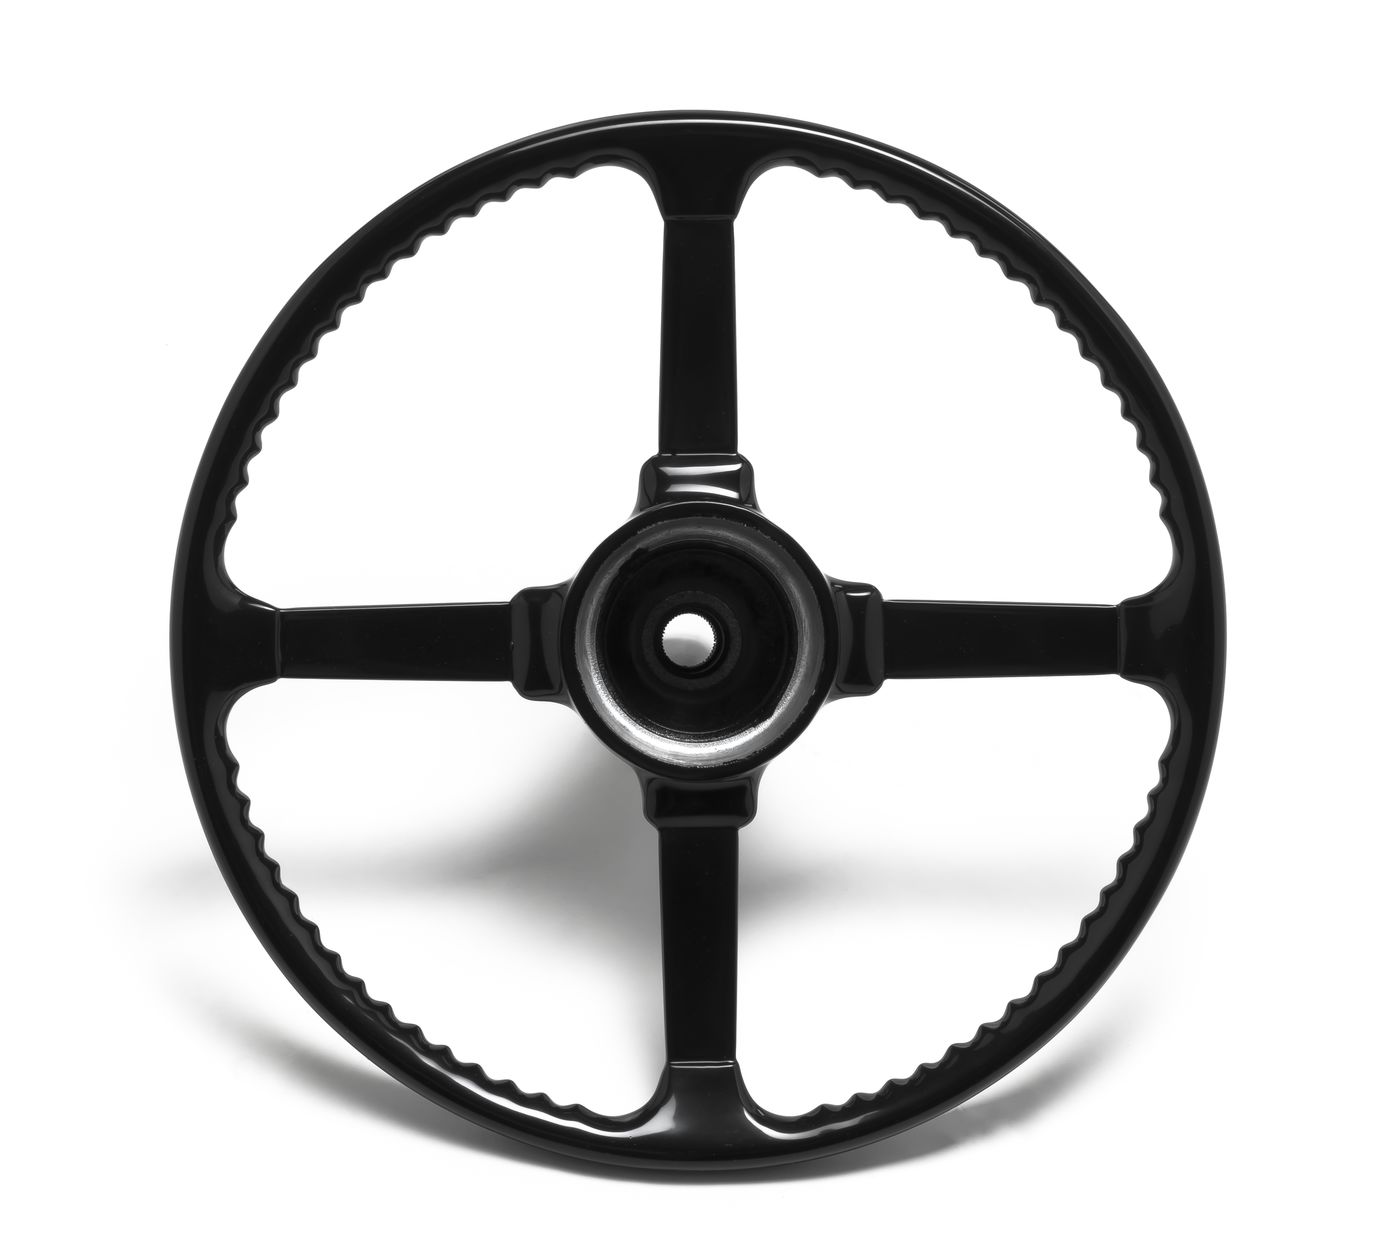 Lenkrad
Steering wheel
Volant
Volante
Volante
Volante